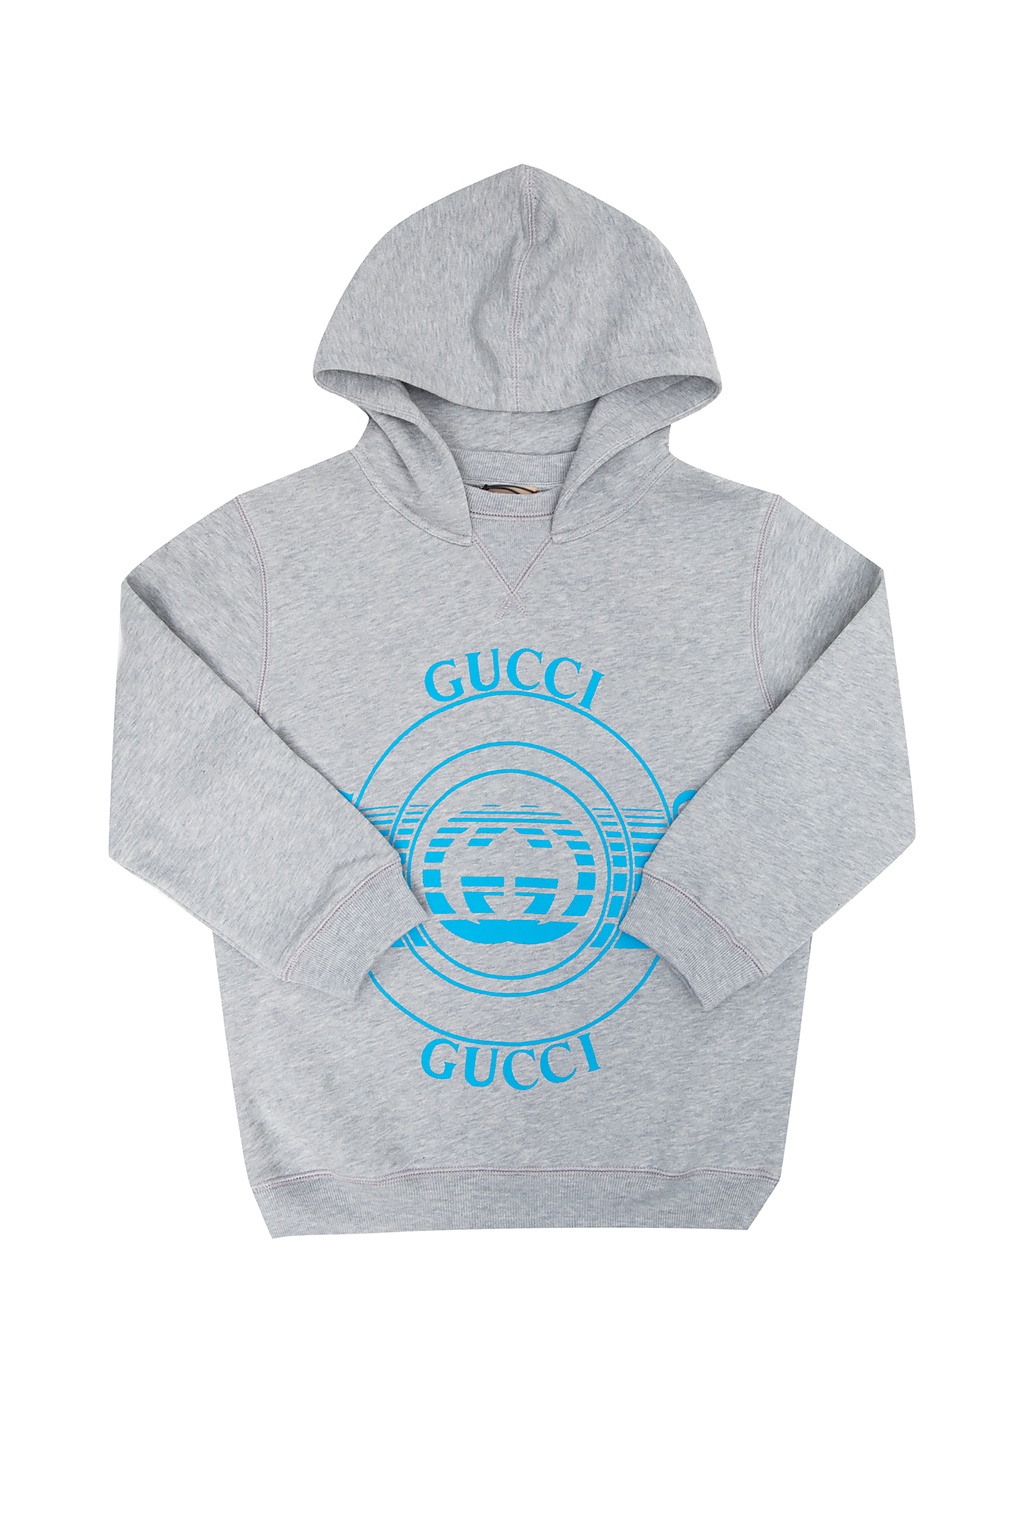 gucci oversized Kids Branded hoodie